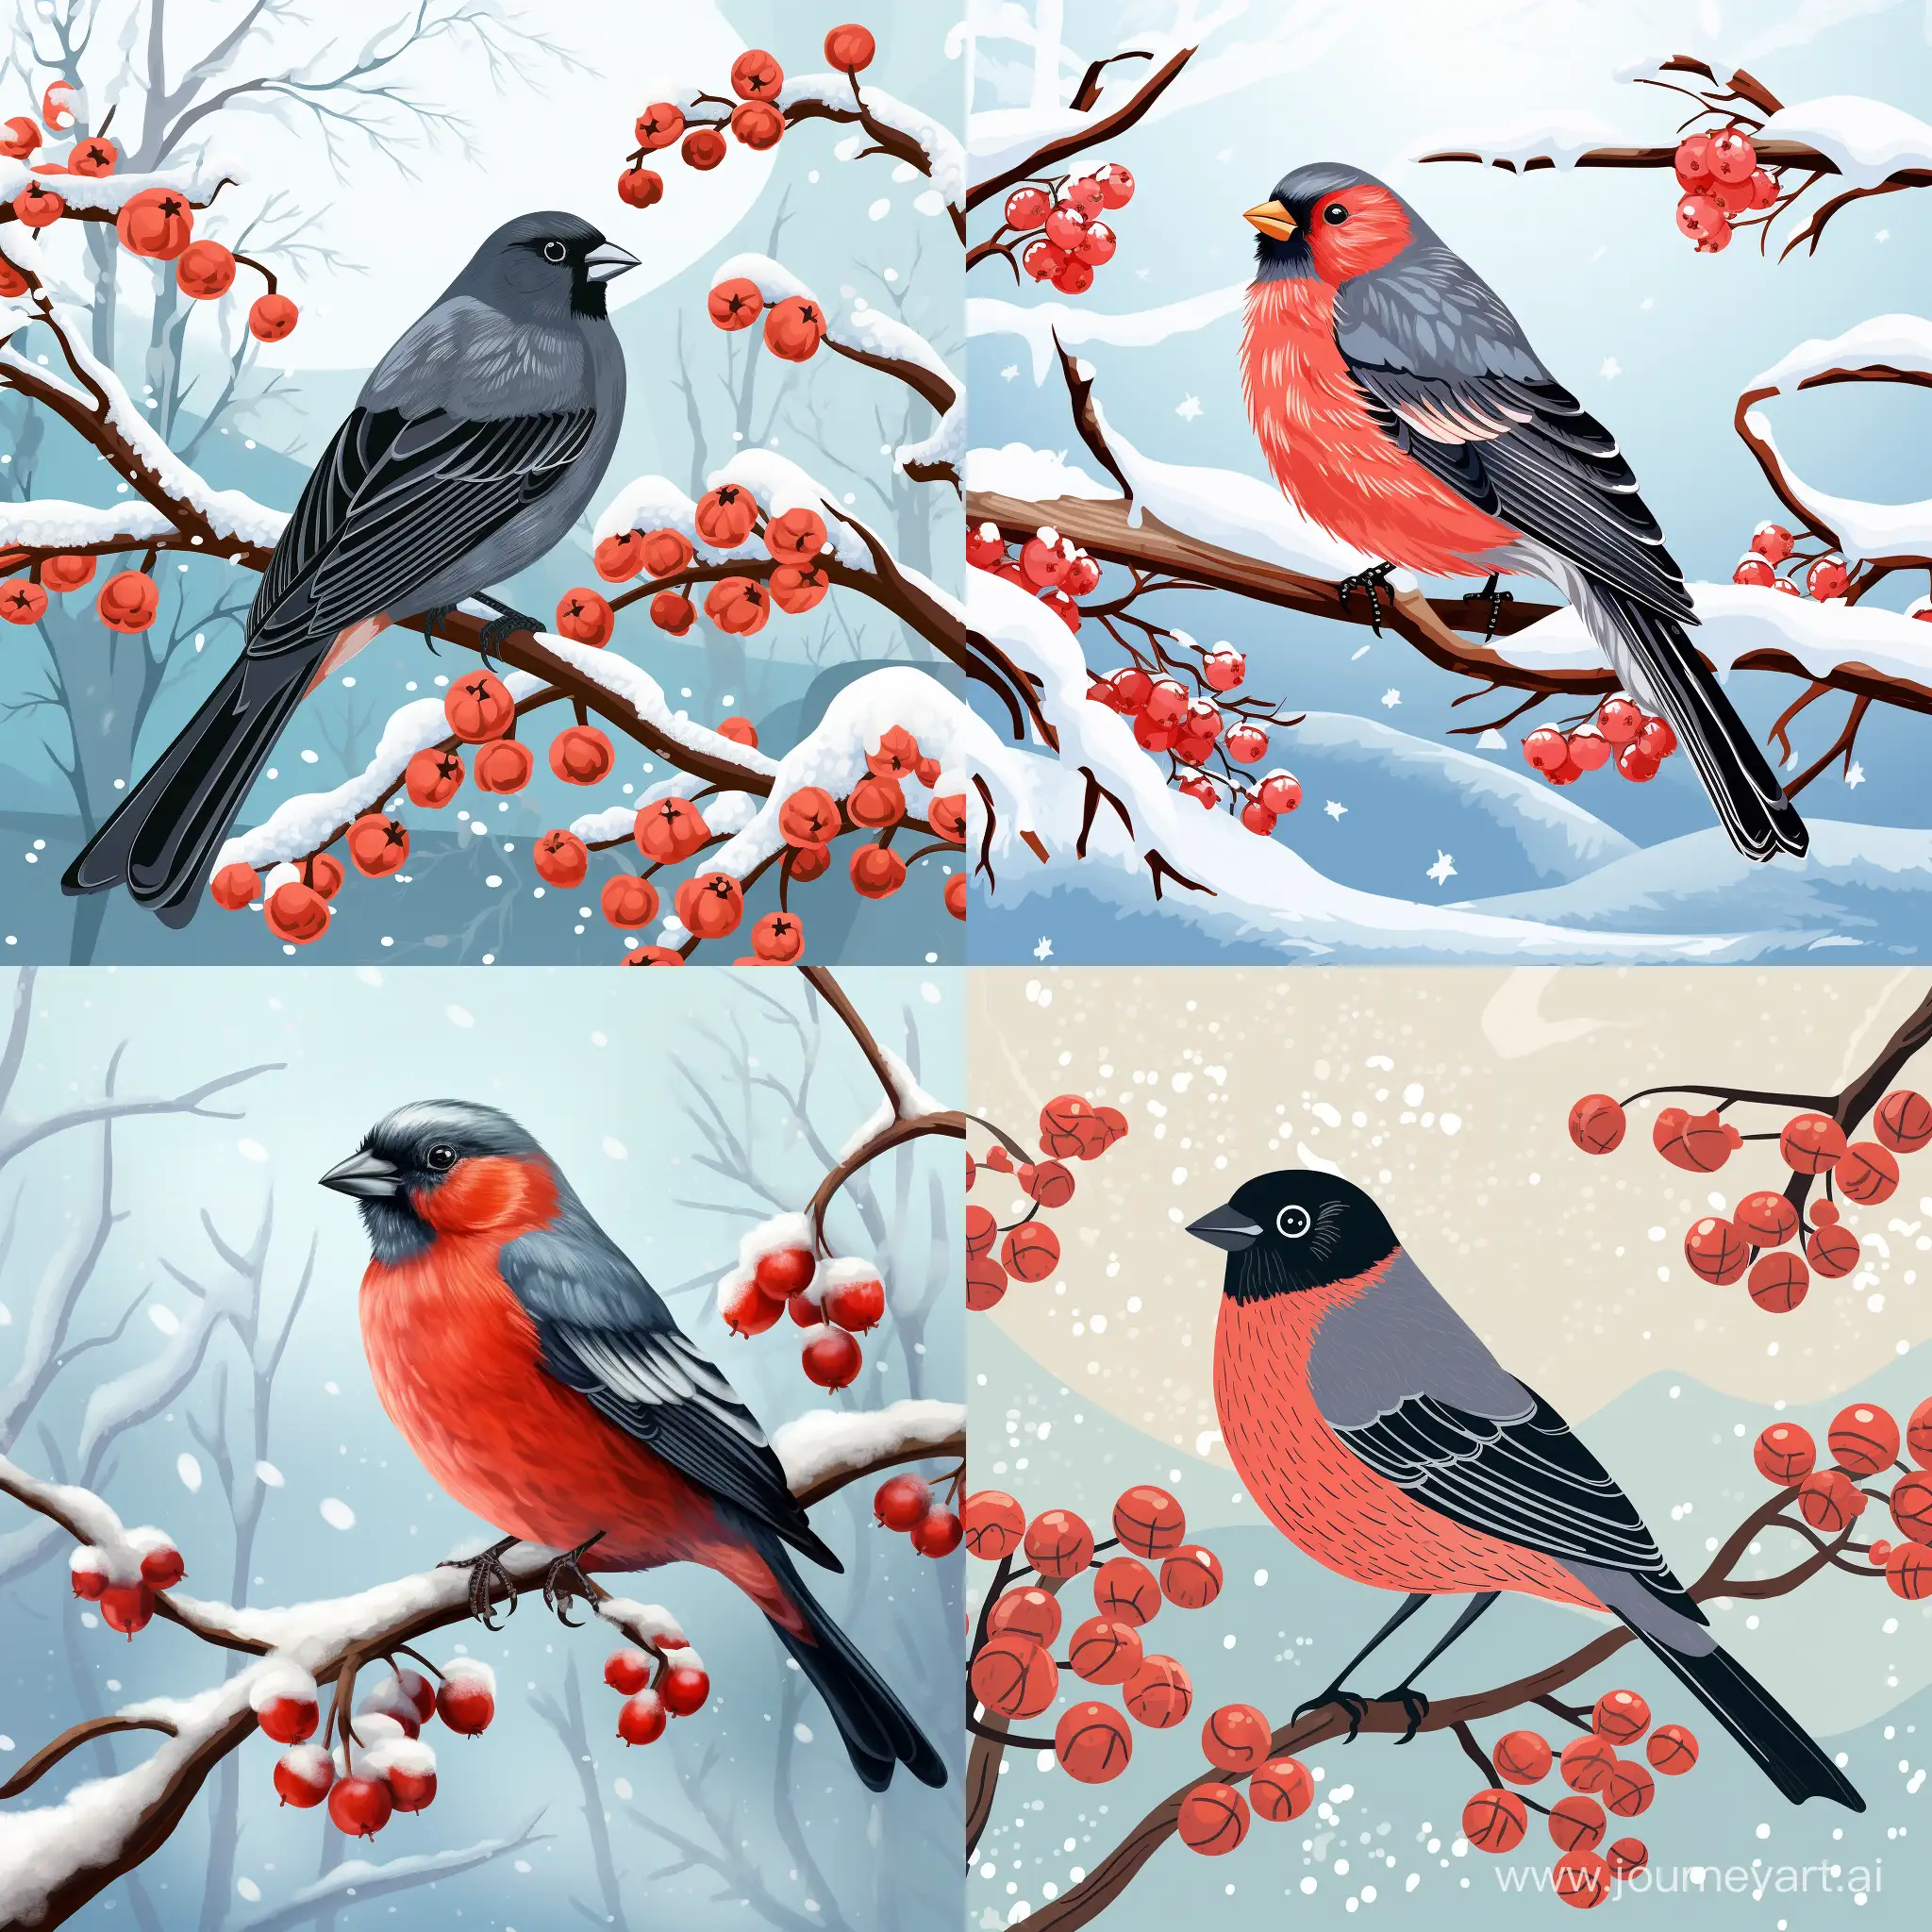 Charming-Snowy-Cartoon-Scene-with-Winter-Rowan-Bullfinch-and-Snow